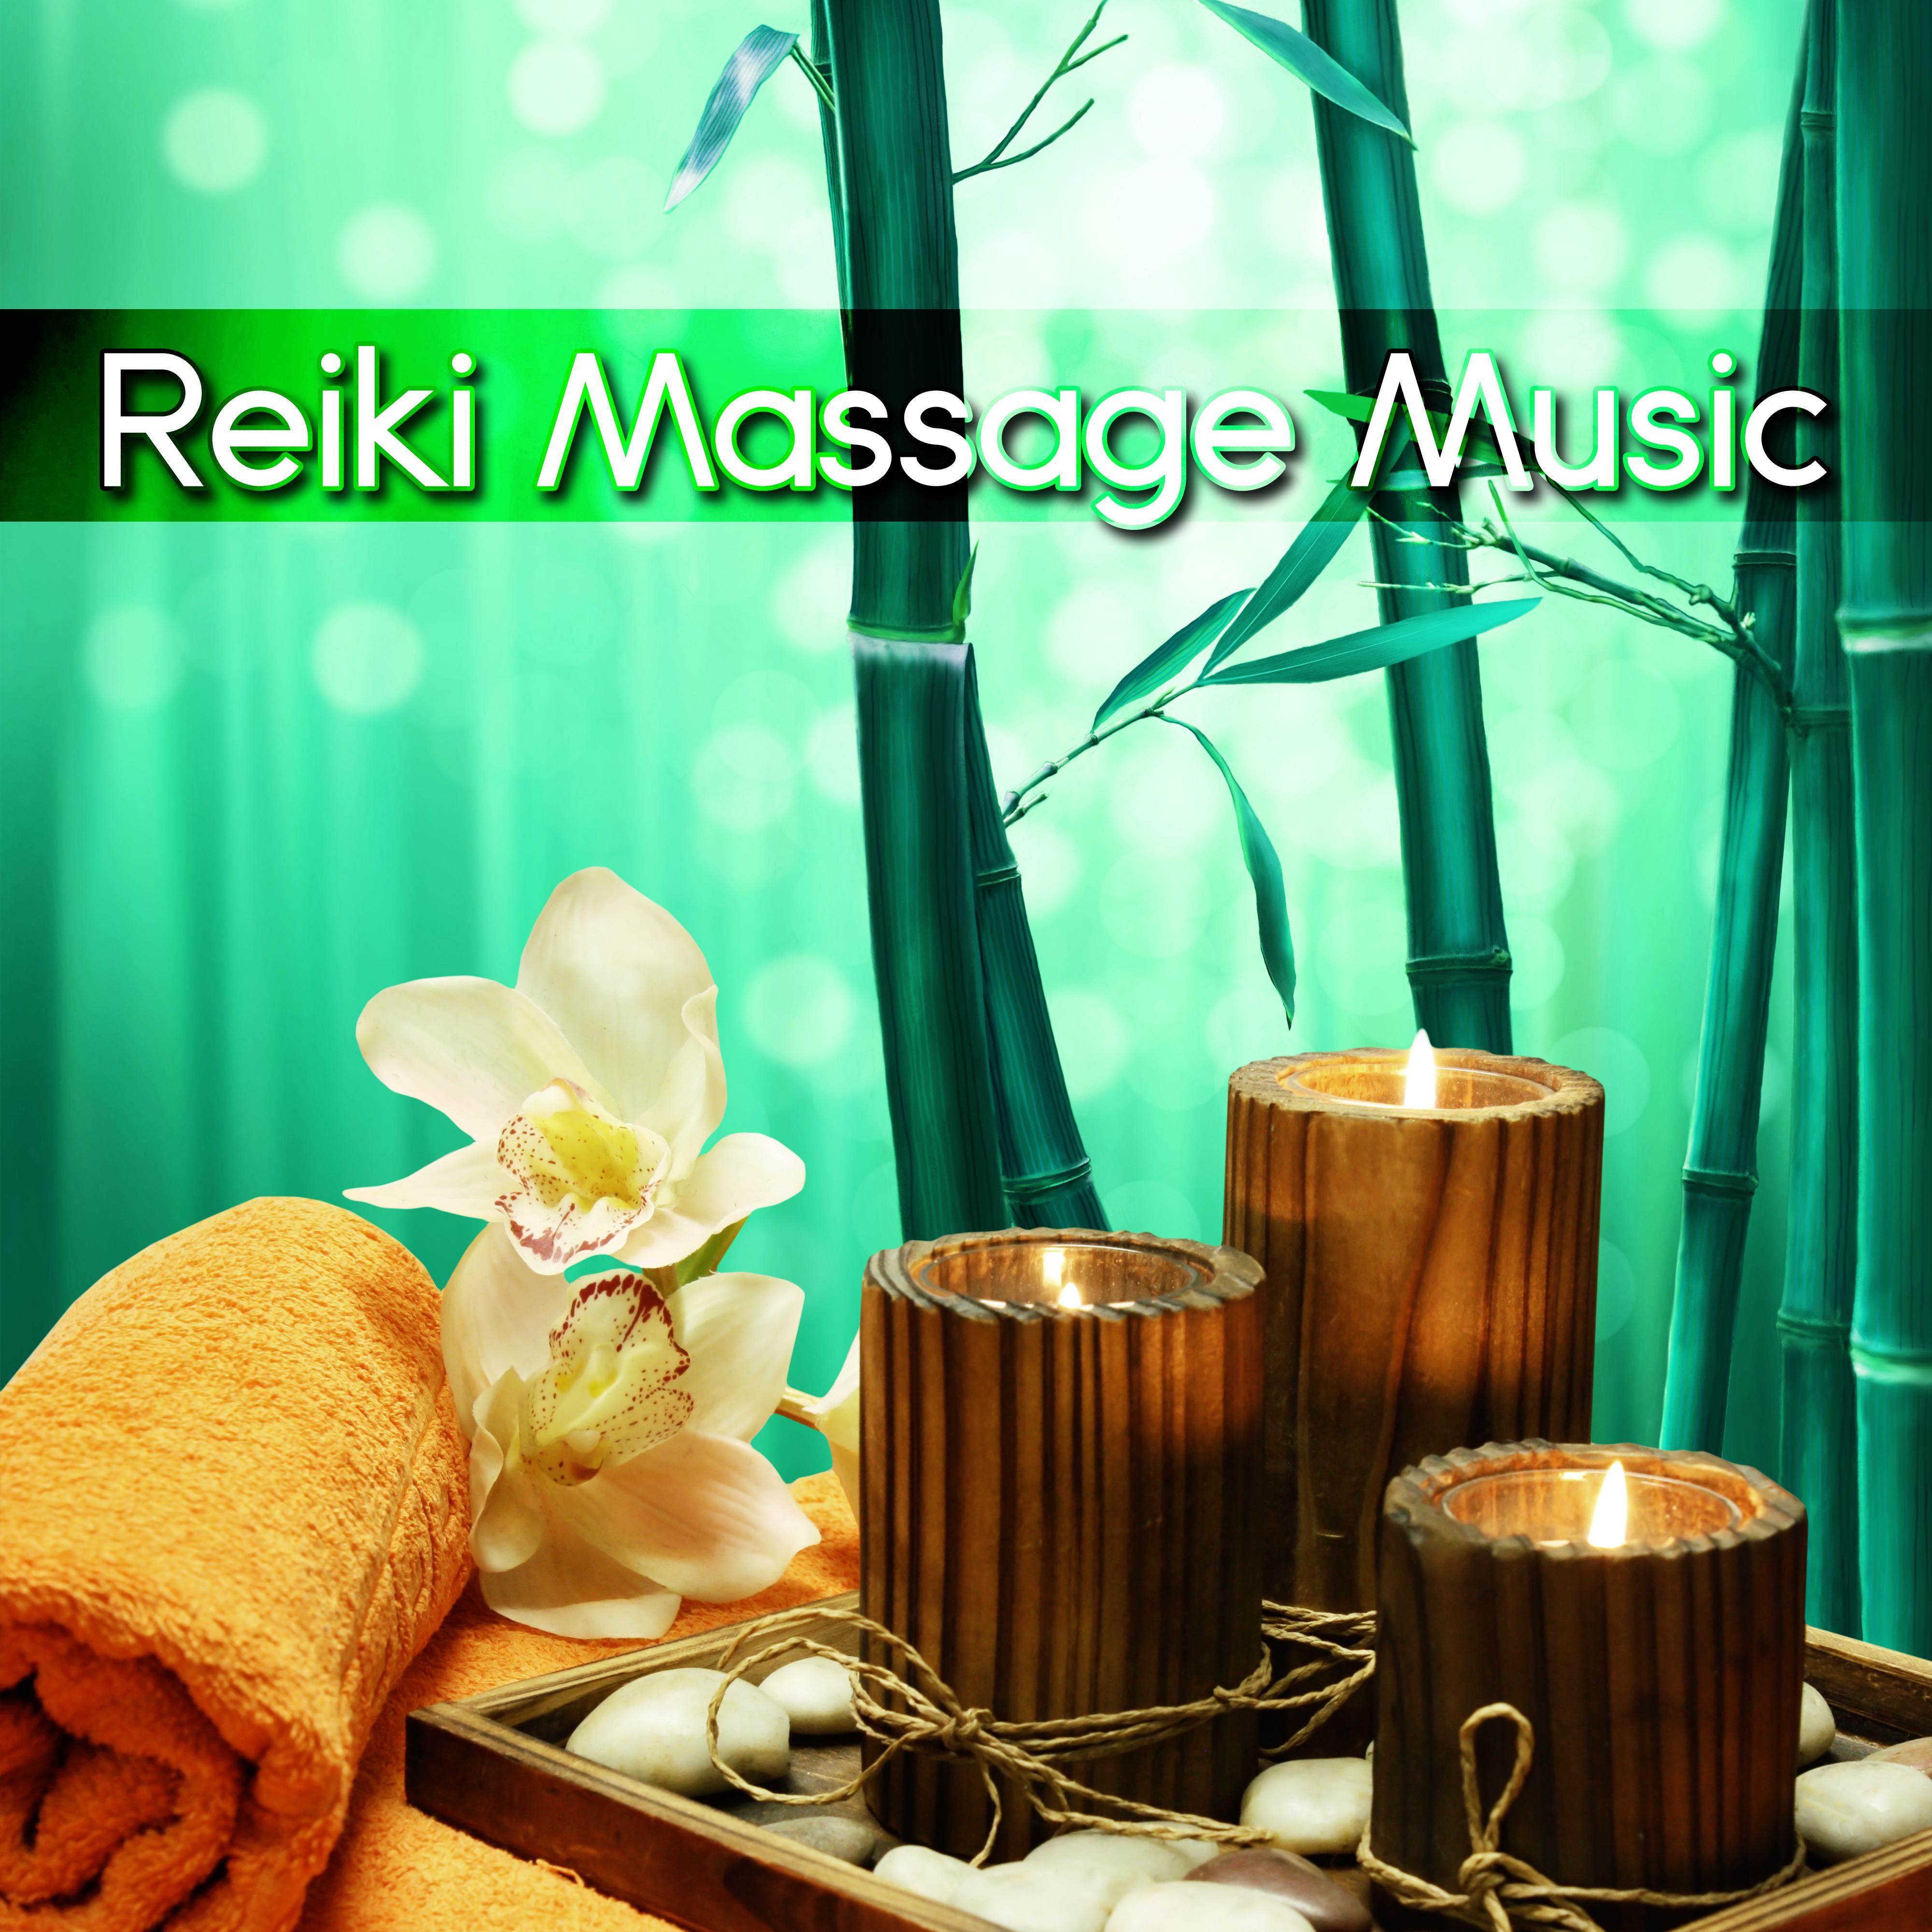 Reiki Massage Music - Beauty, Meditation, Yoga, Deep Sleep and Well-Being, Instrumental Music & Sounds of Nature